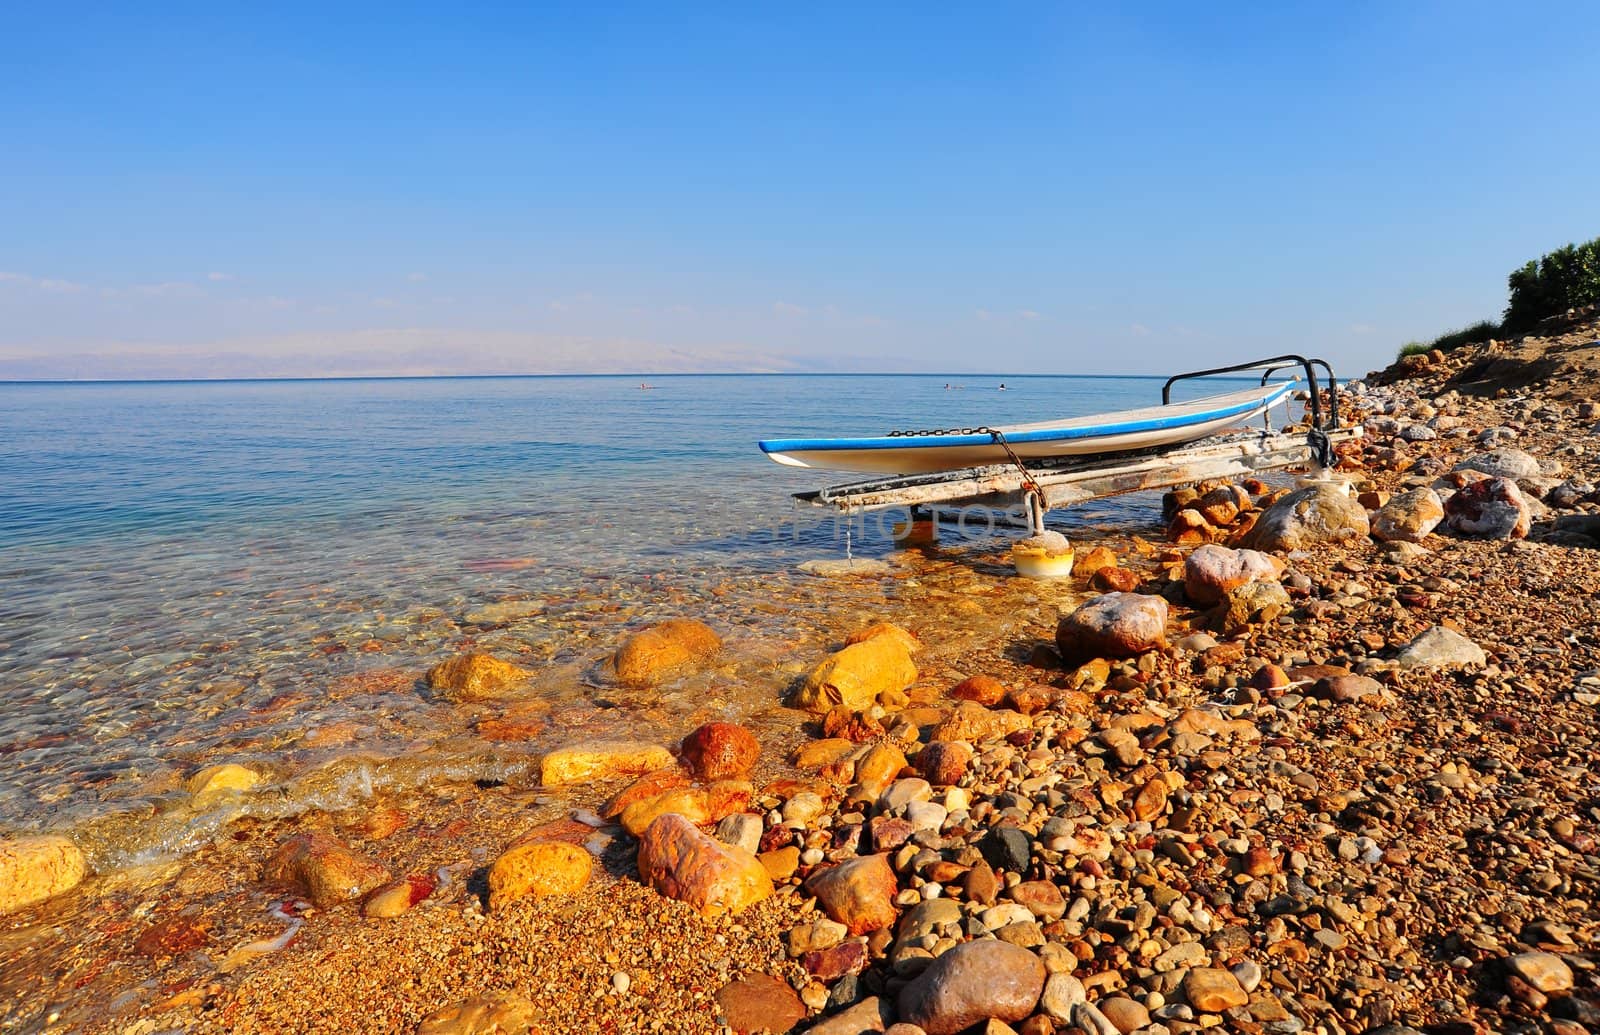 Salt Glazed Board For Windsurfing On The Beach Of Dead Sea.